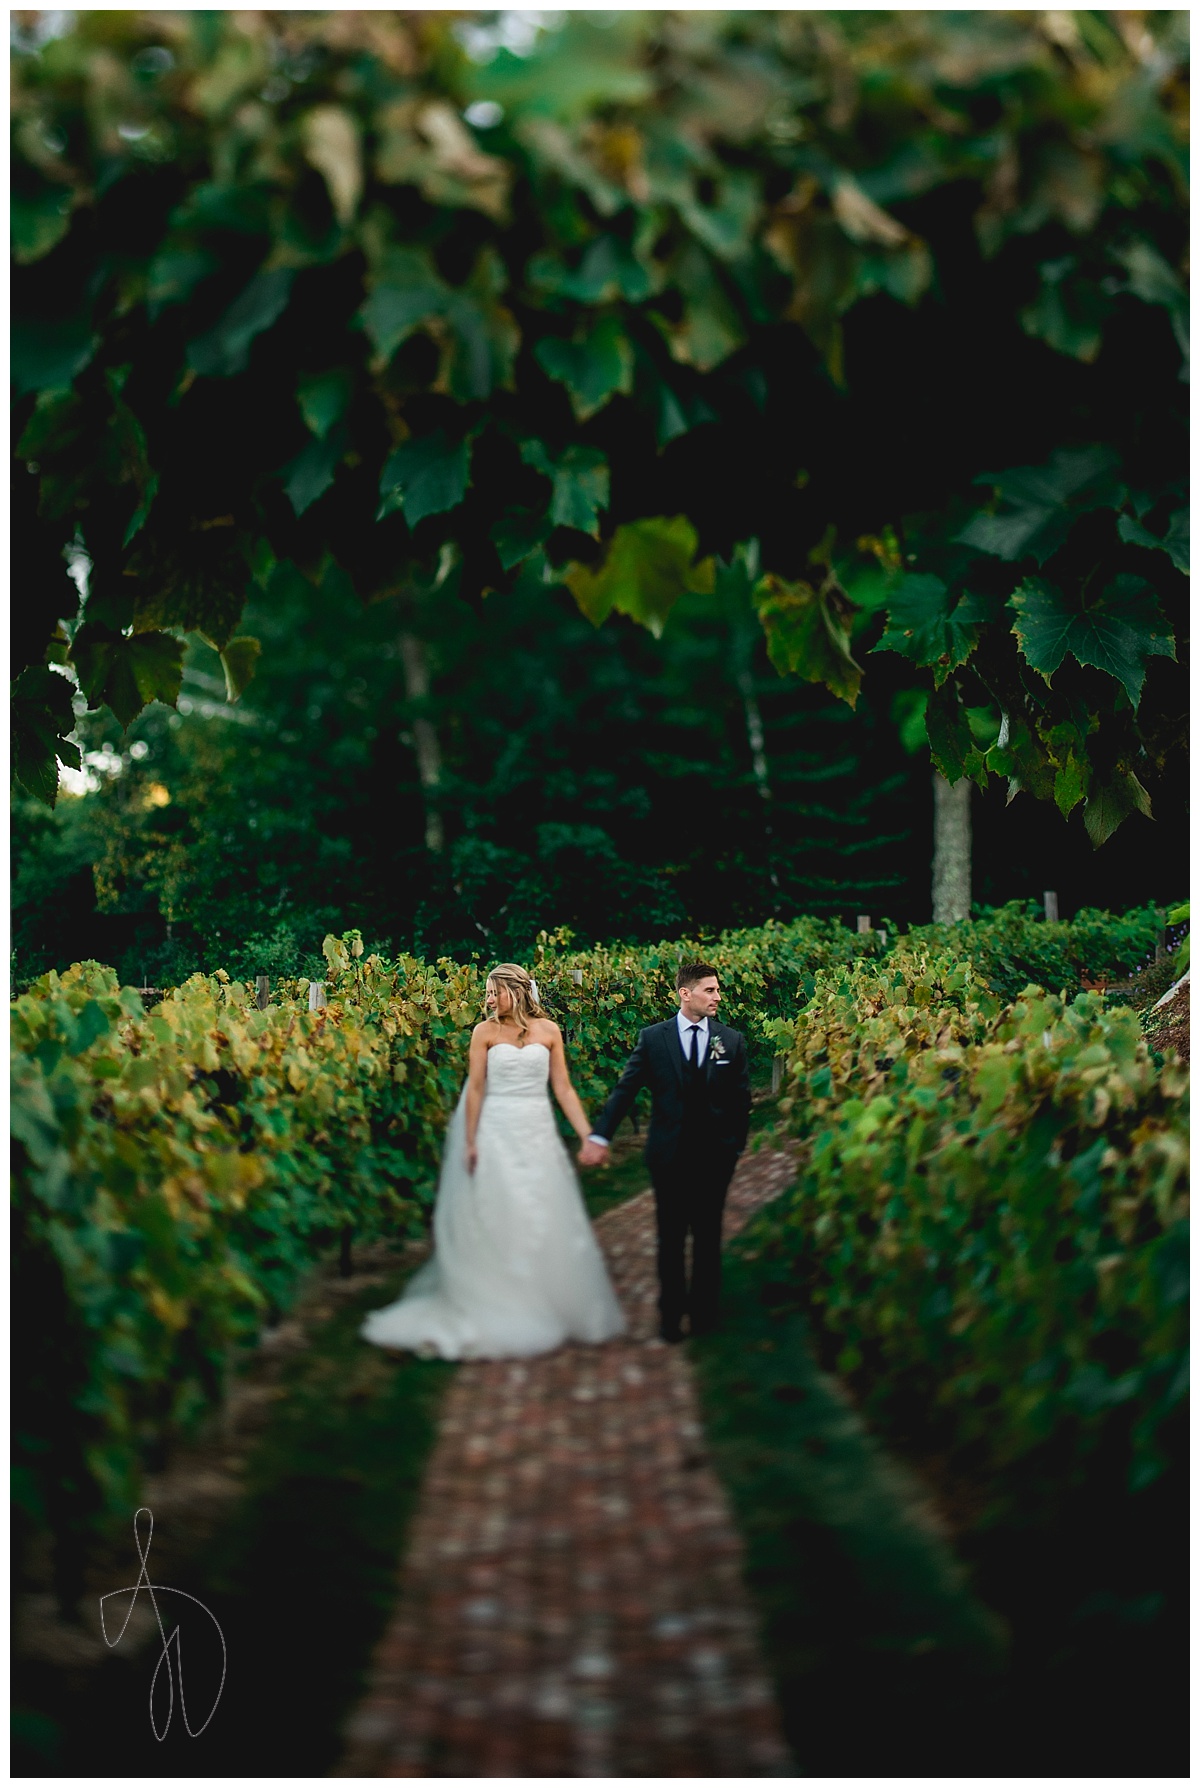 Zorvino's Wedding Photography